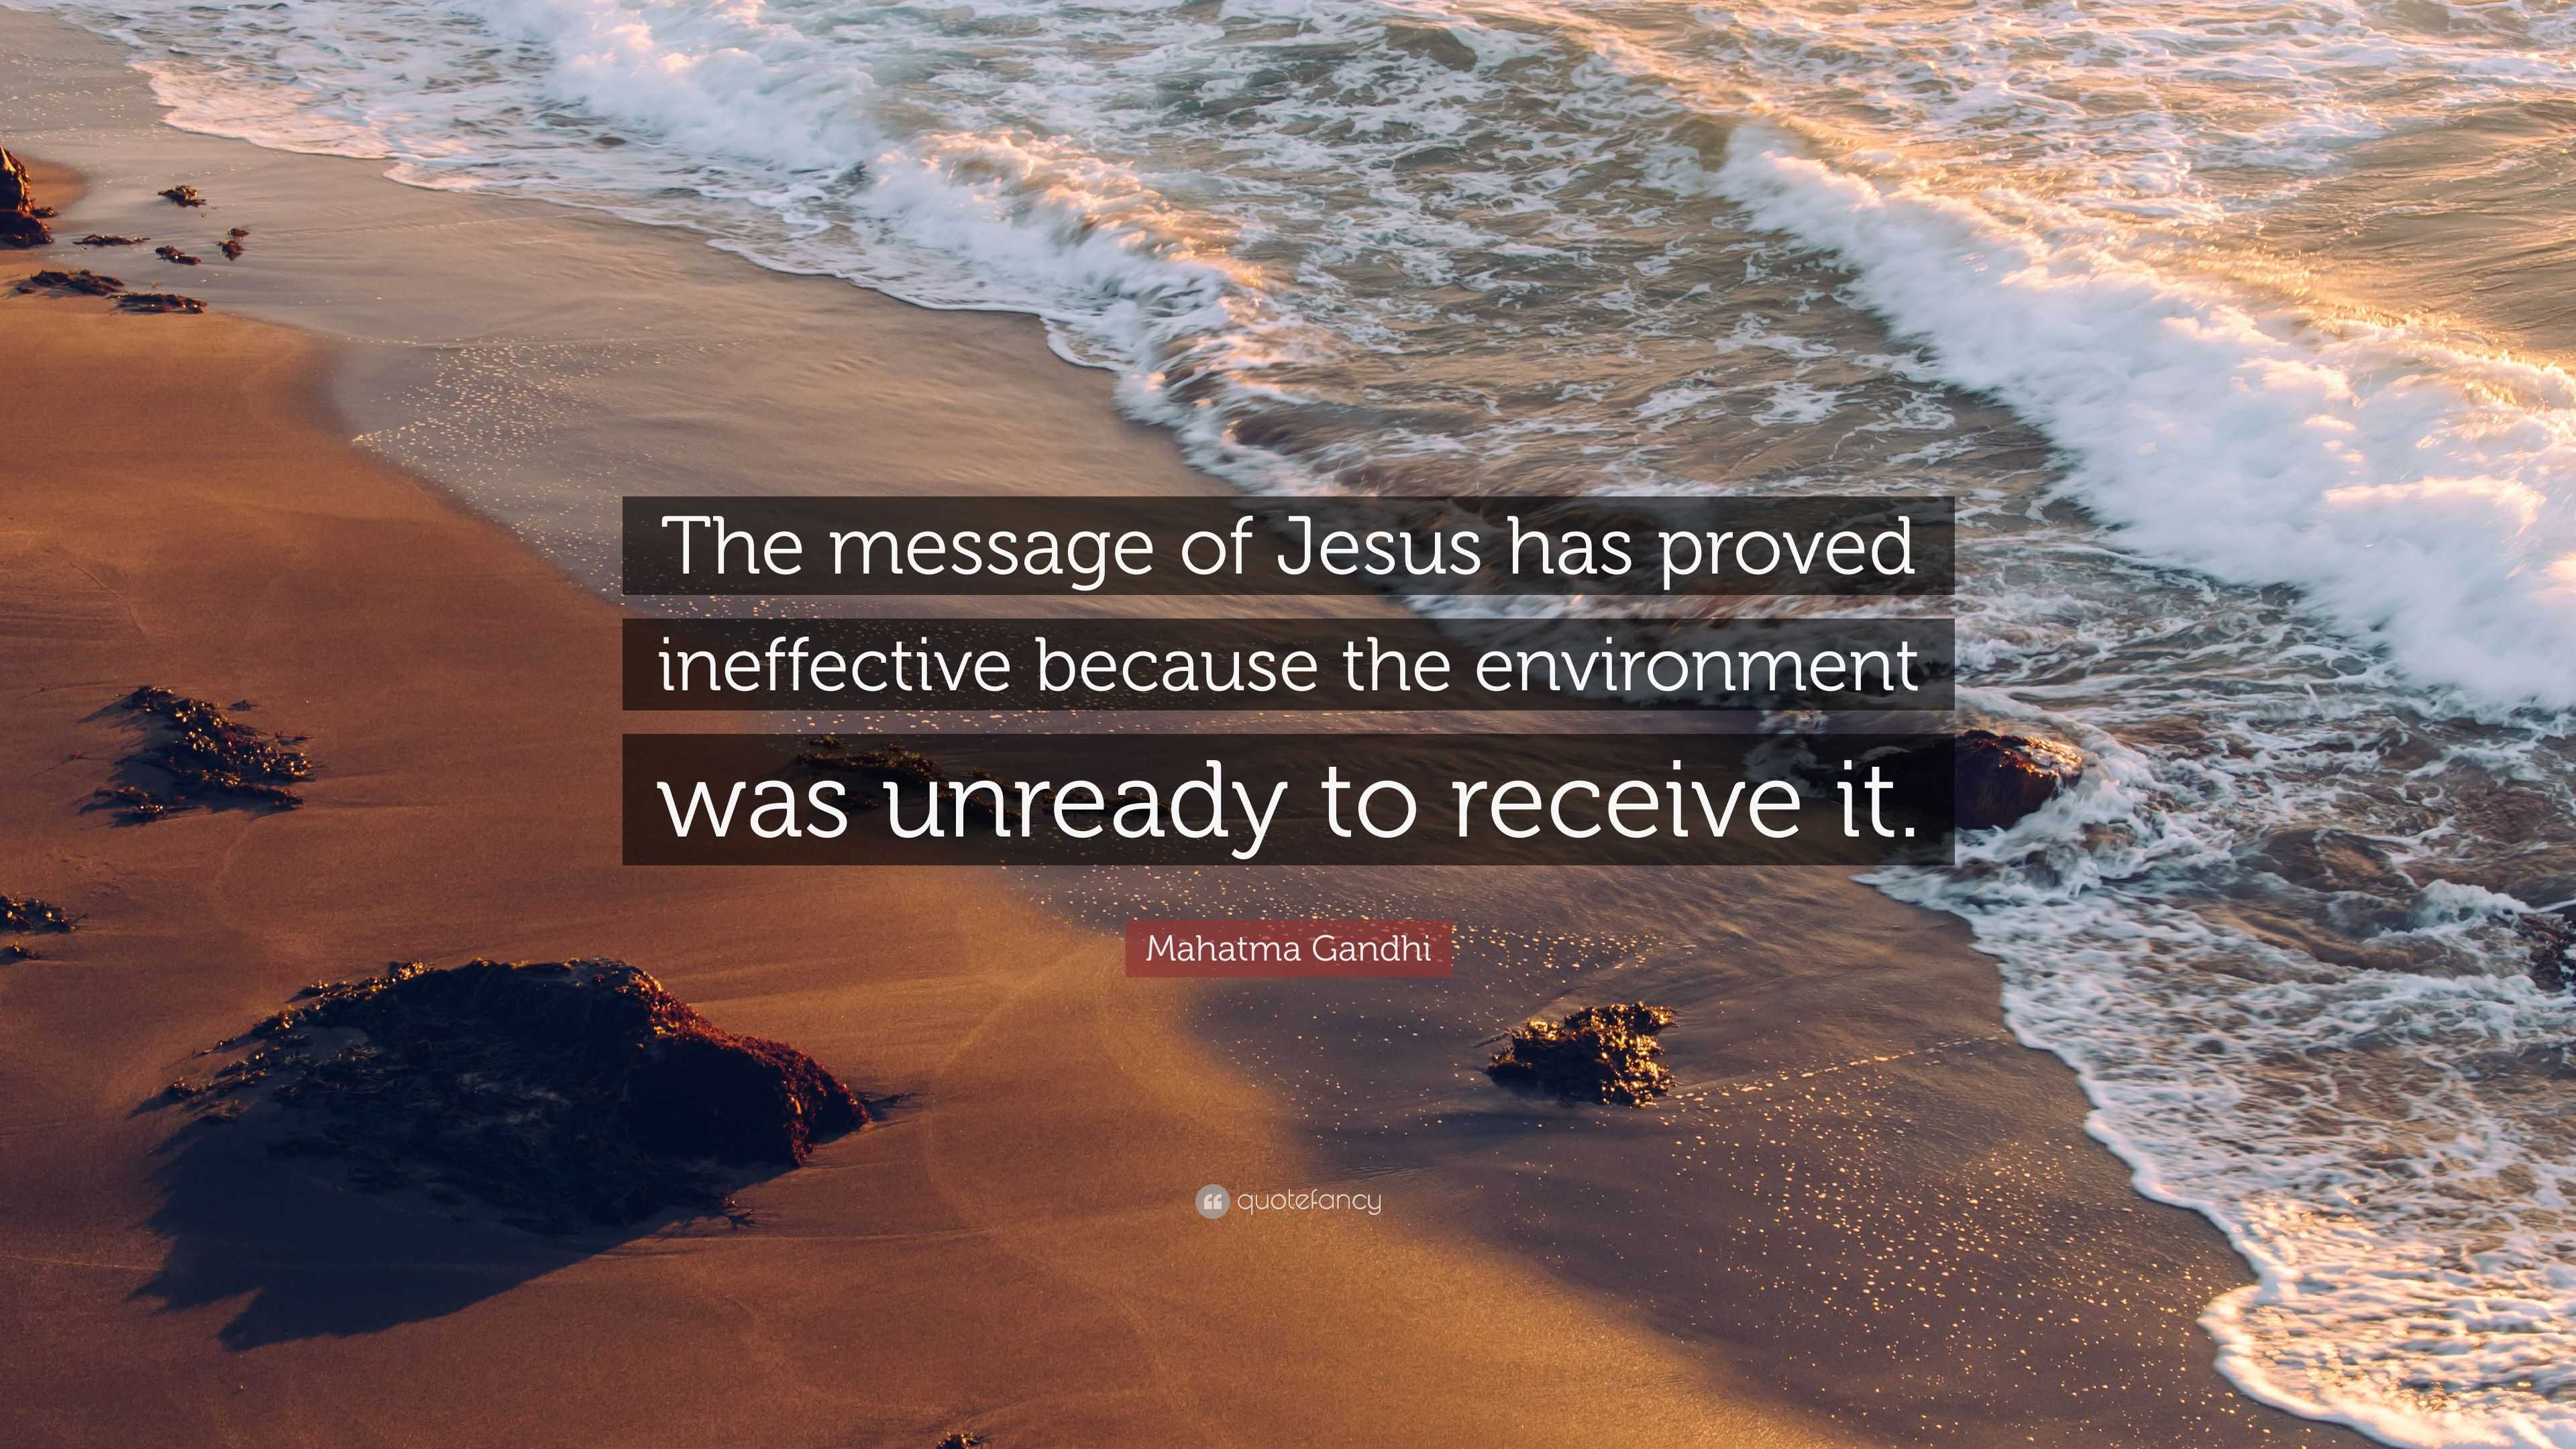 Mahatma Gandhi Quote: “The message of Jesus has proved ineffective